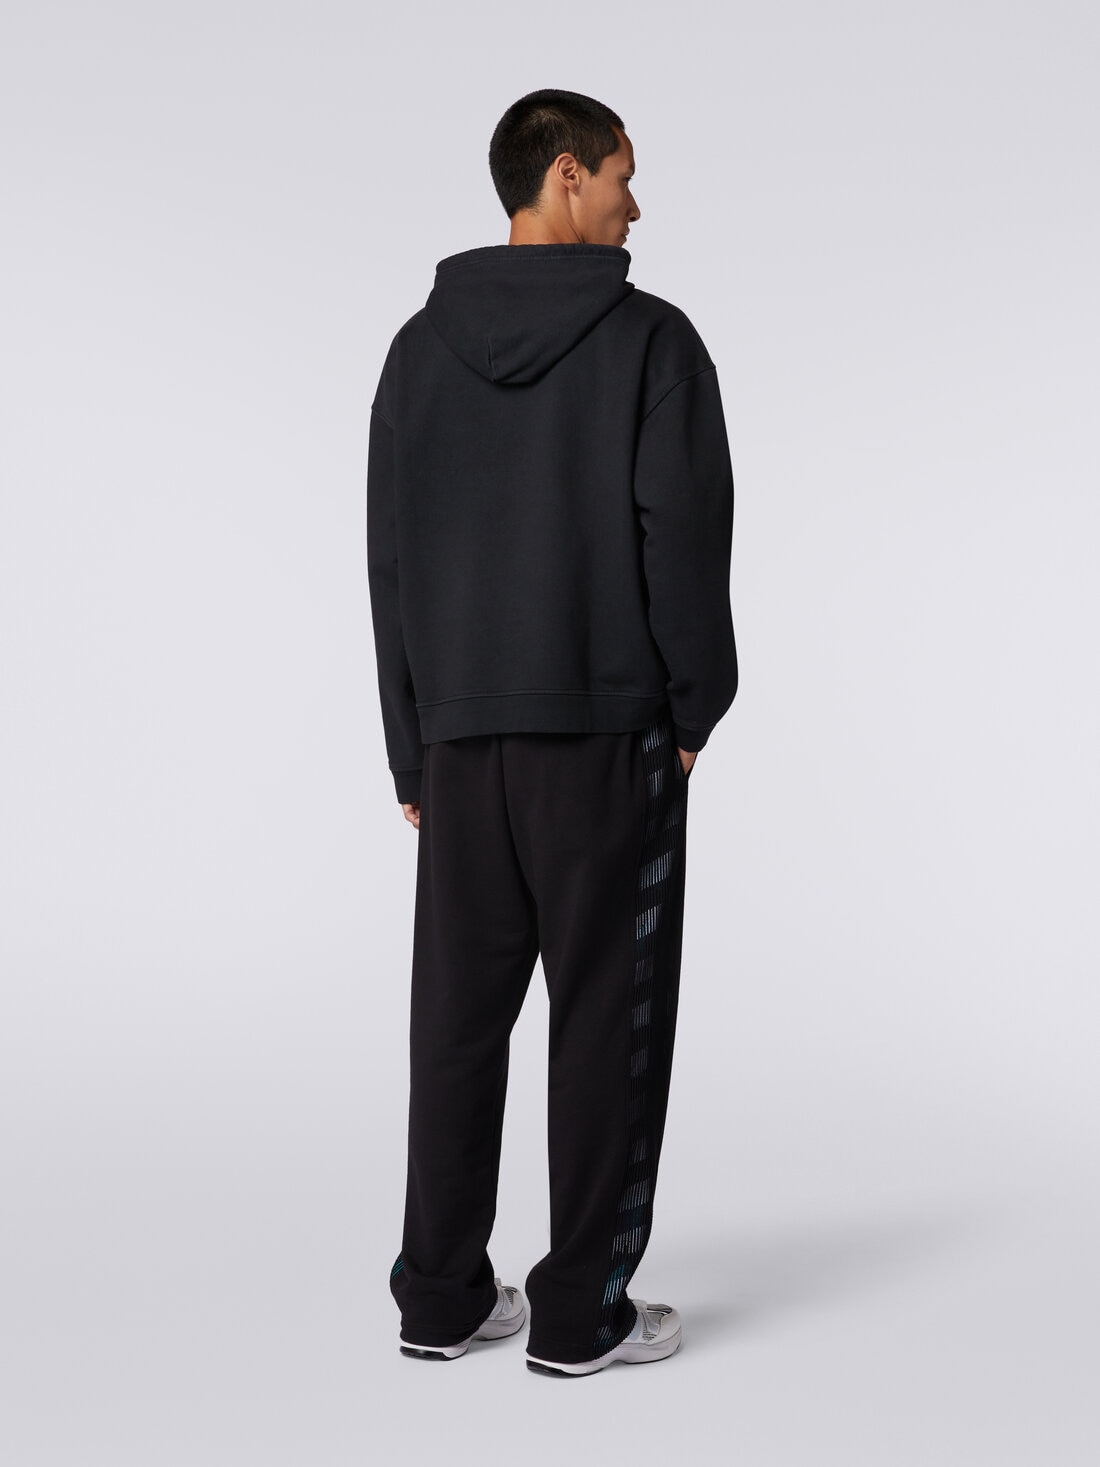 Hooded sweatshirt in cotton with logo, Black    - TS24SW02BJ00H0S91J4 - 3